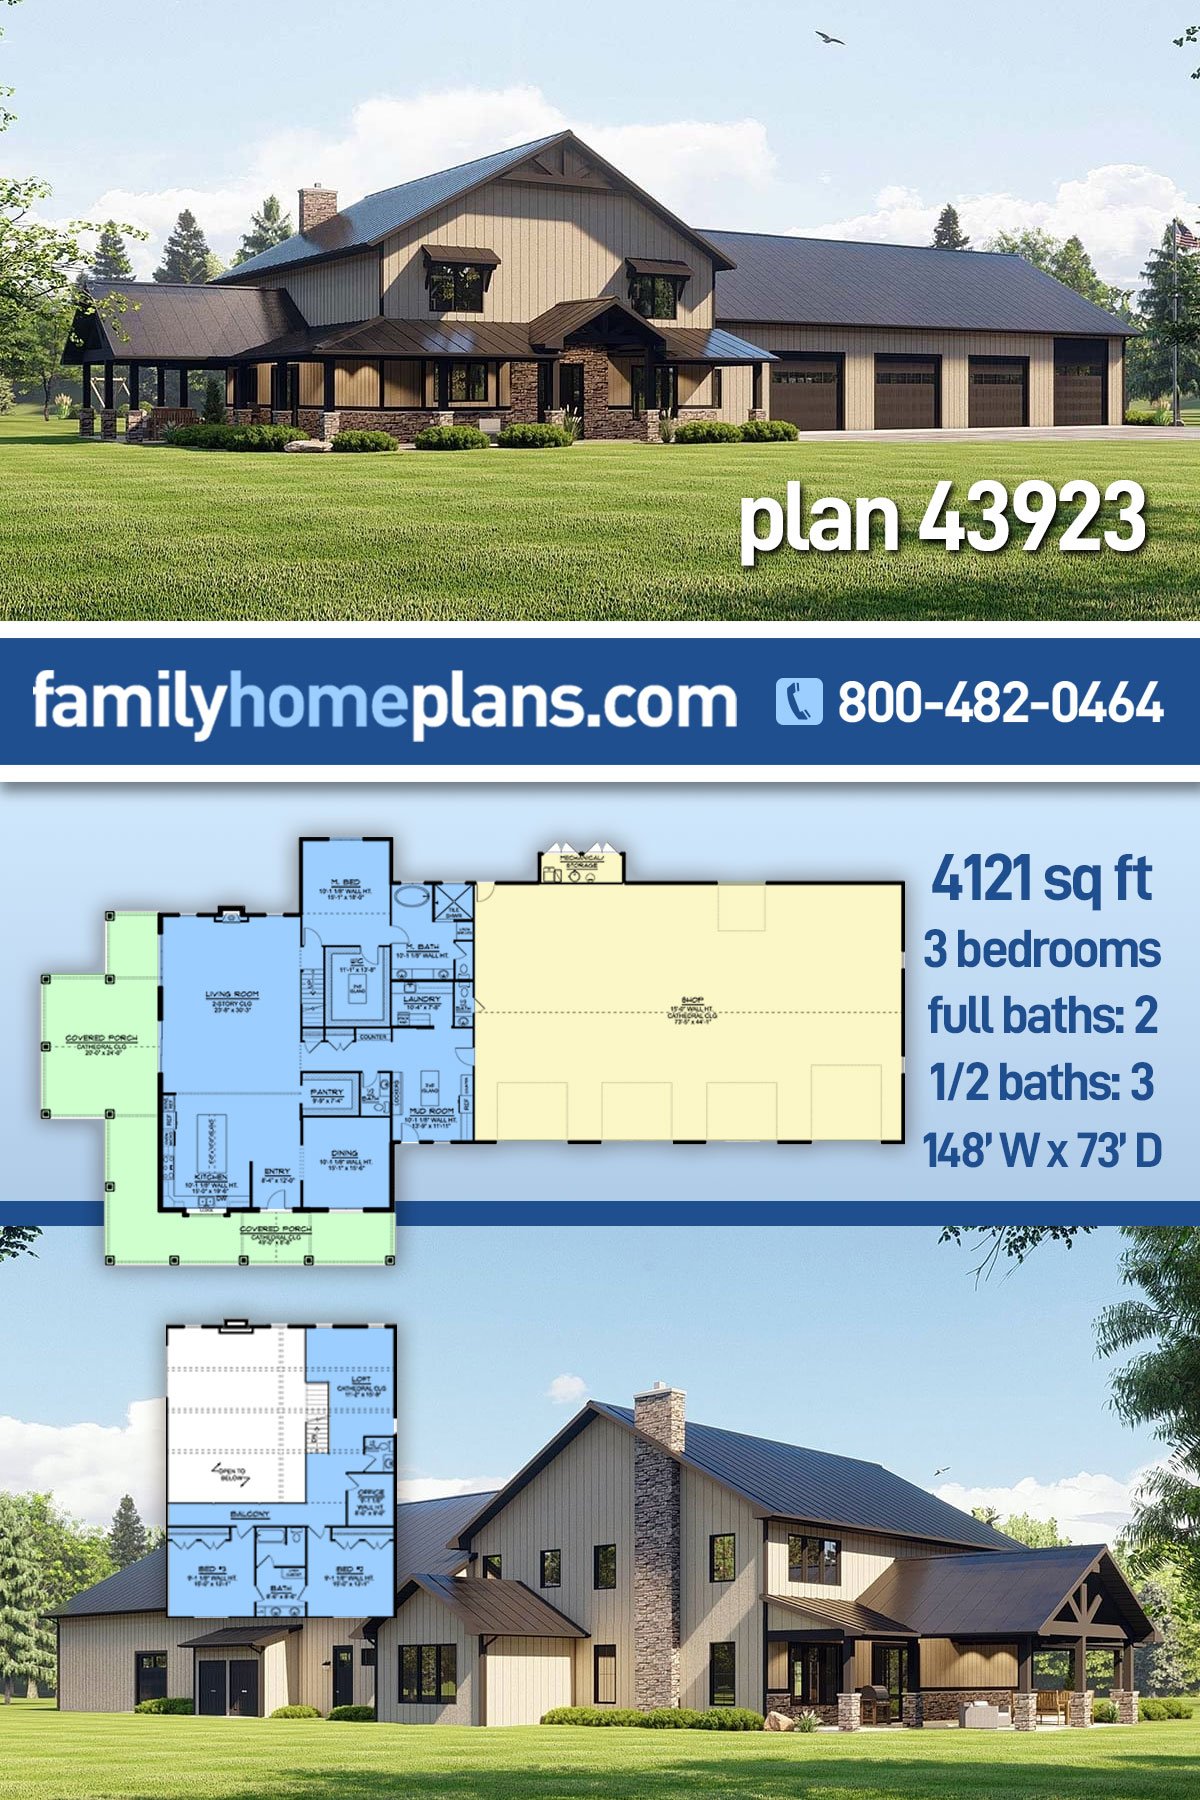 House Plan 43923